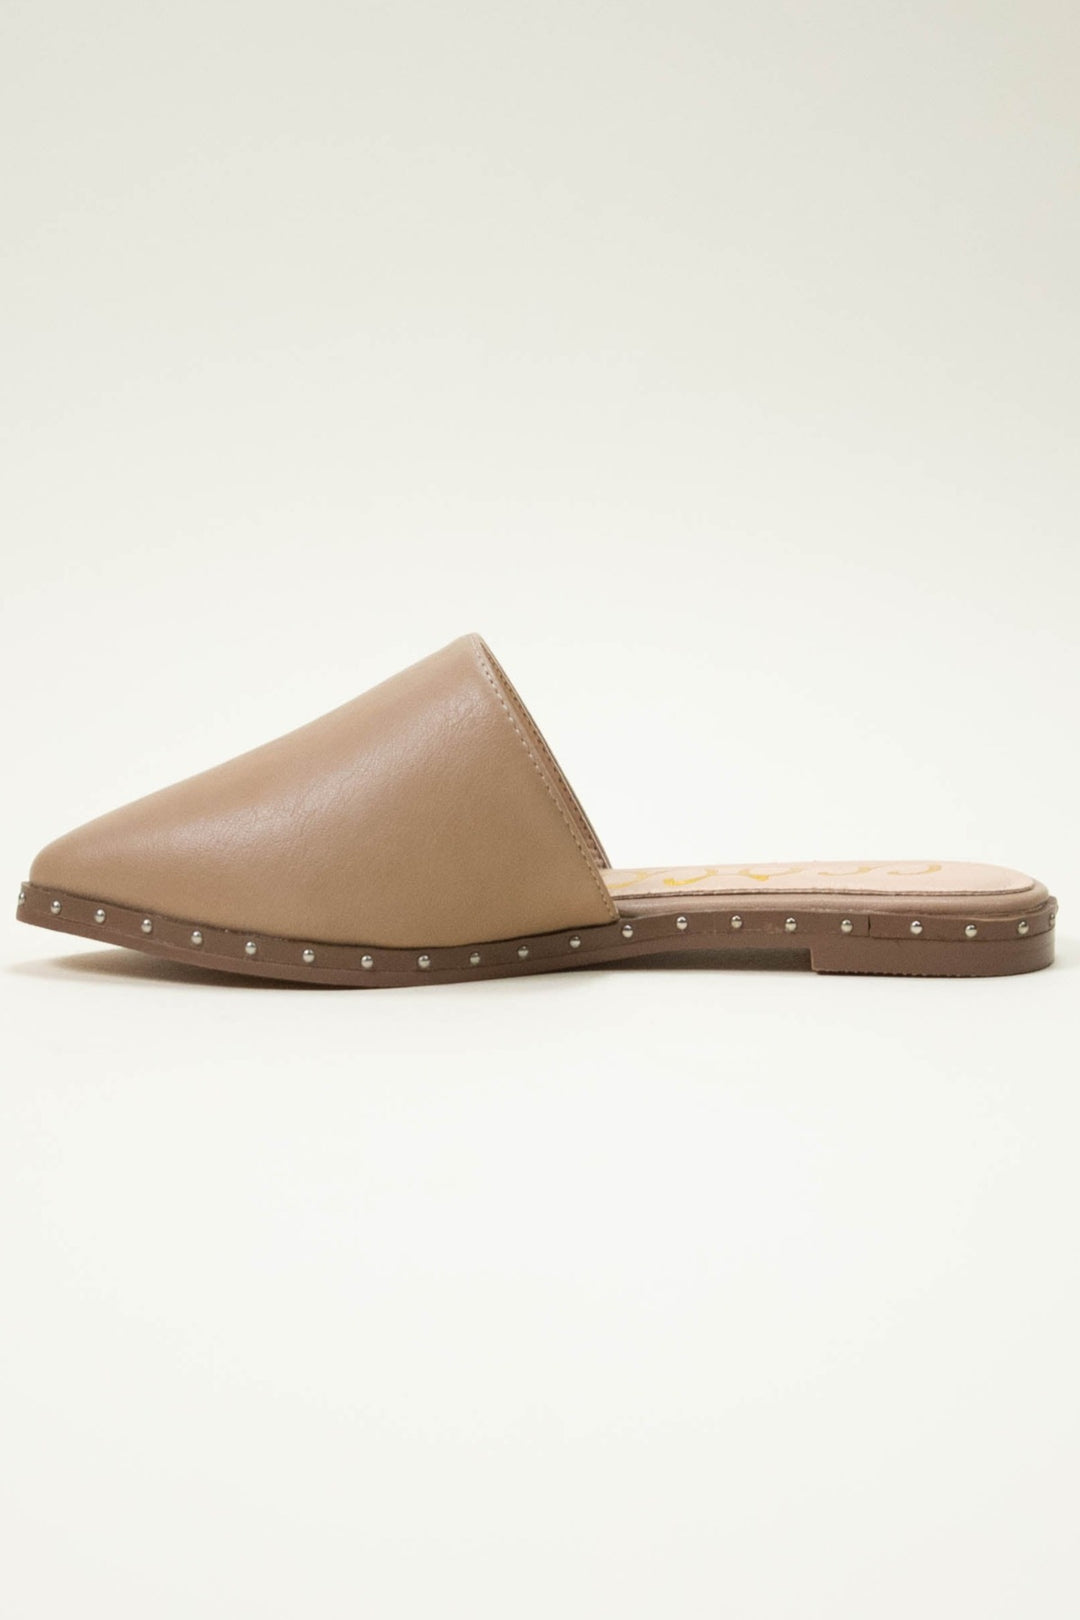 Monroe Studded Pointed Toe Mule Slides - Taupe